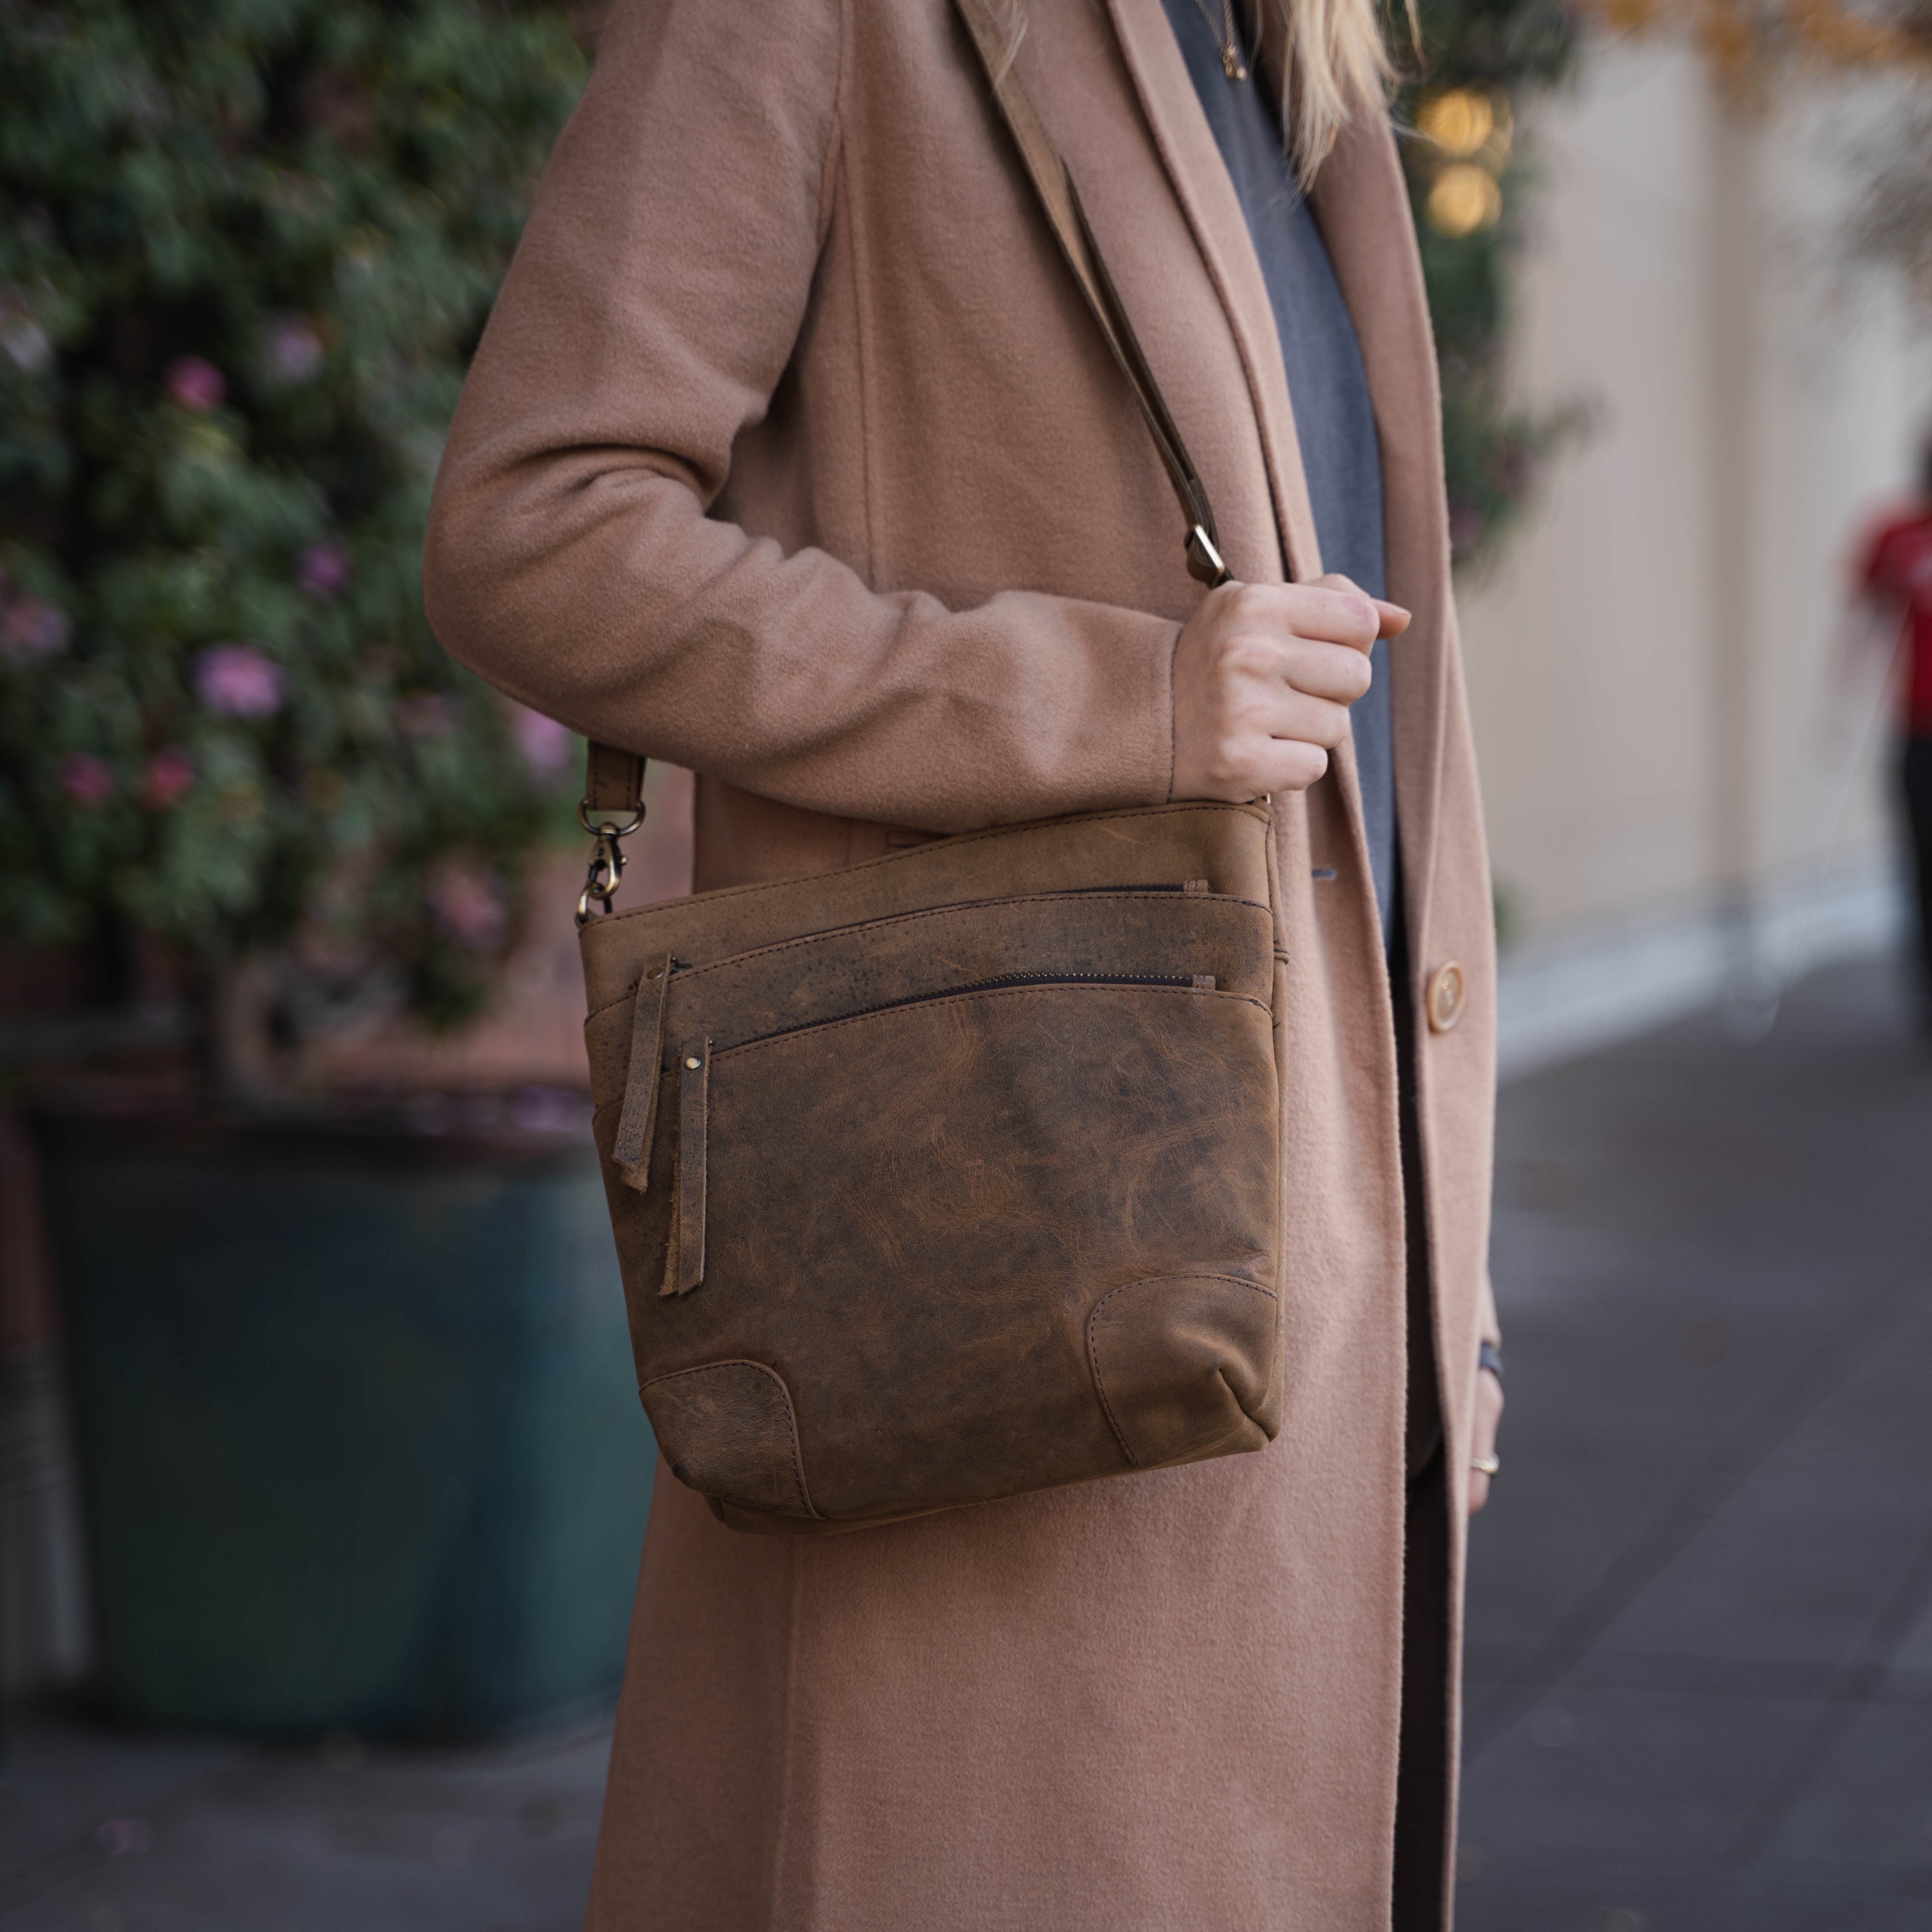 Leather Purse Women Shoulder Bag Crossbody Satchel Ladies Tote Travel